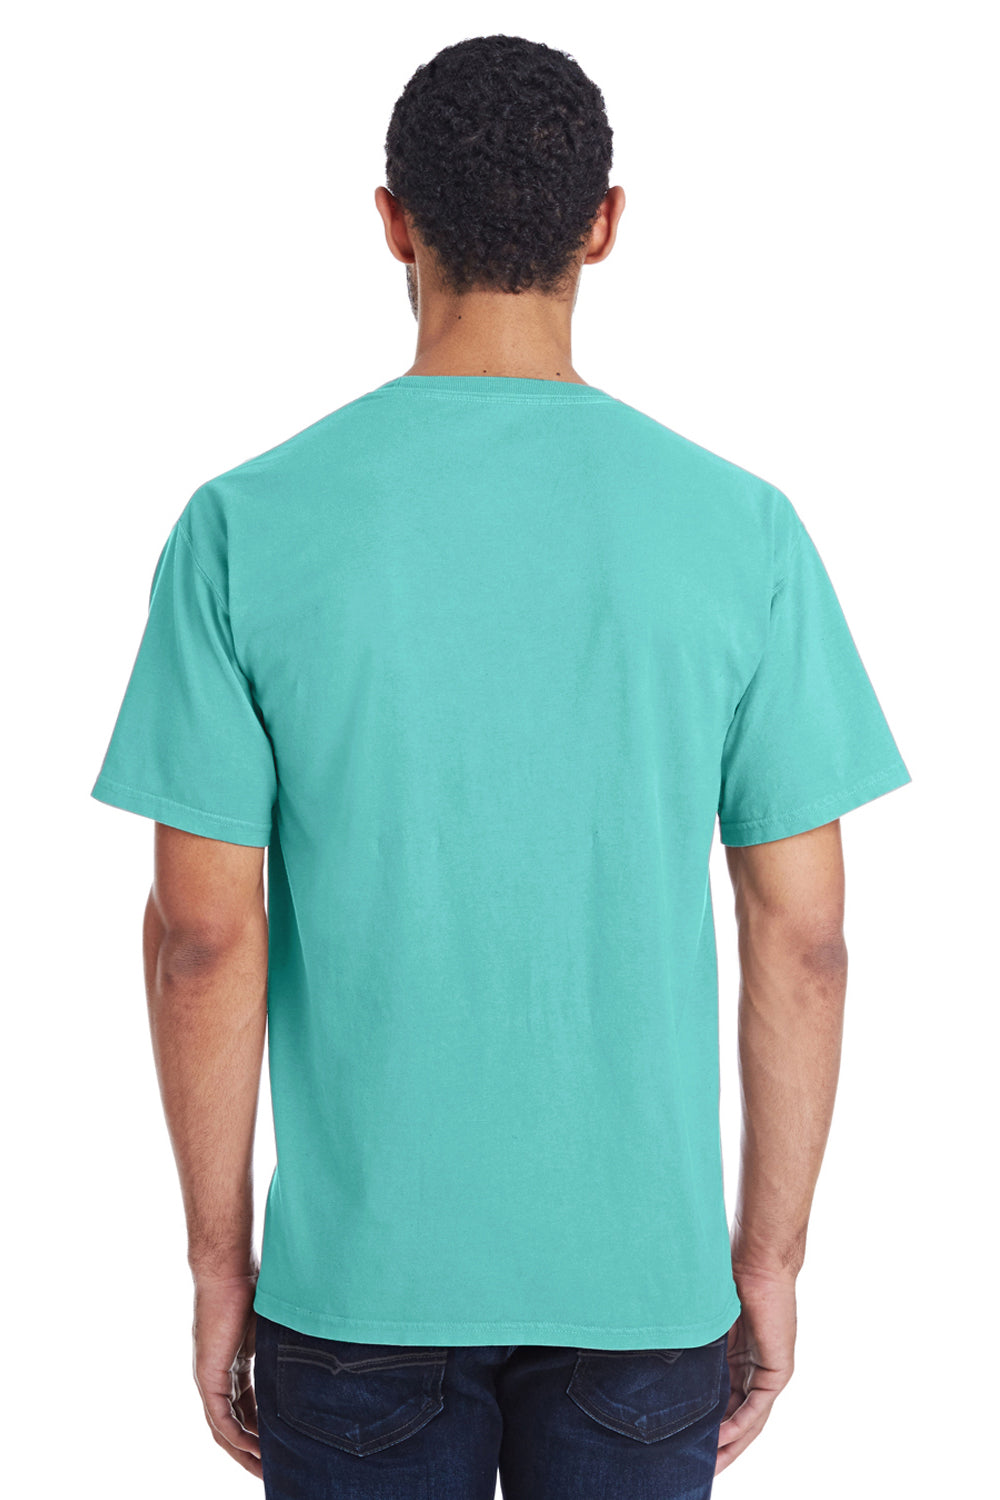 ComfortWash By Hanes GDH100 Mens Short Sleeve Crewneck T-Shirt Mint Green Back